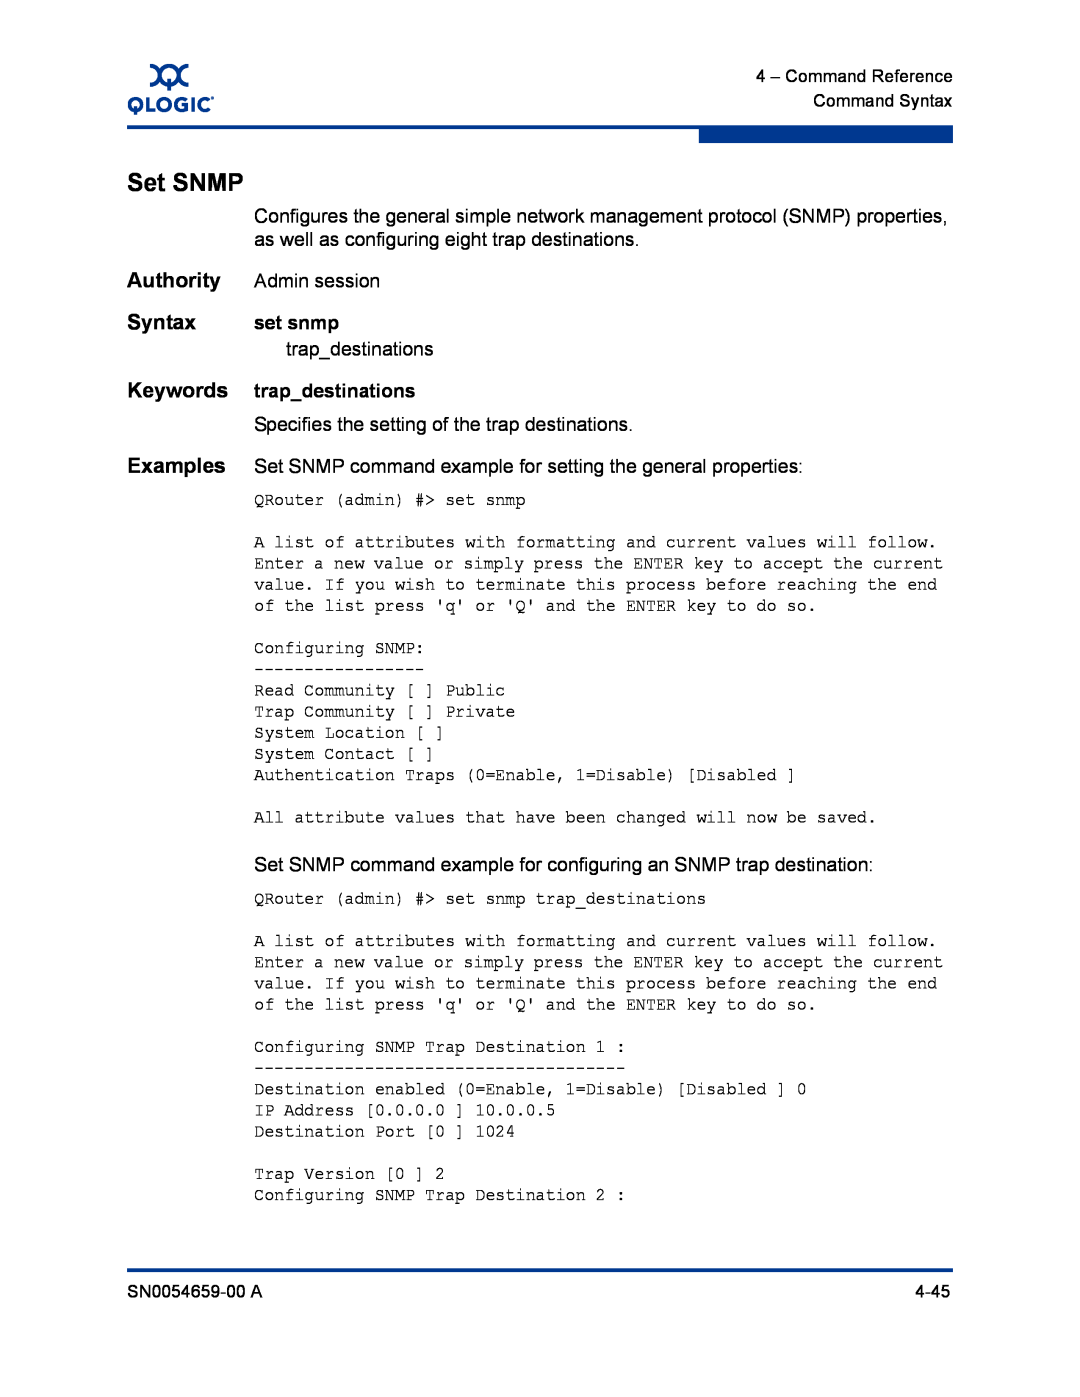 Q-Logic ISR6142 manual Set SNMP, Authority, Syntax, Keywords, Examples 